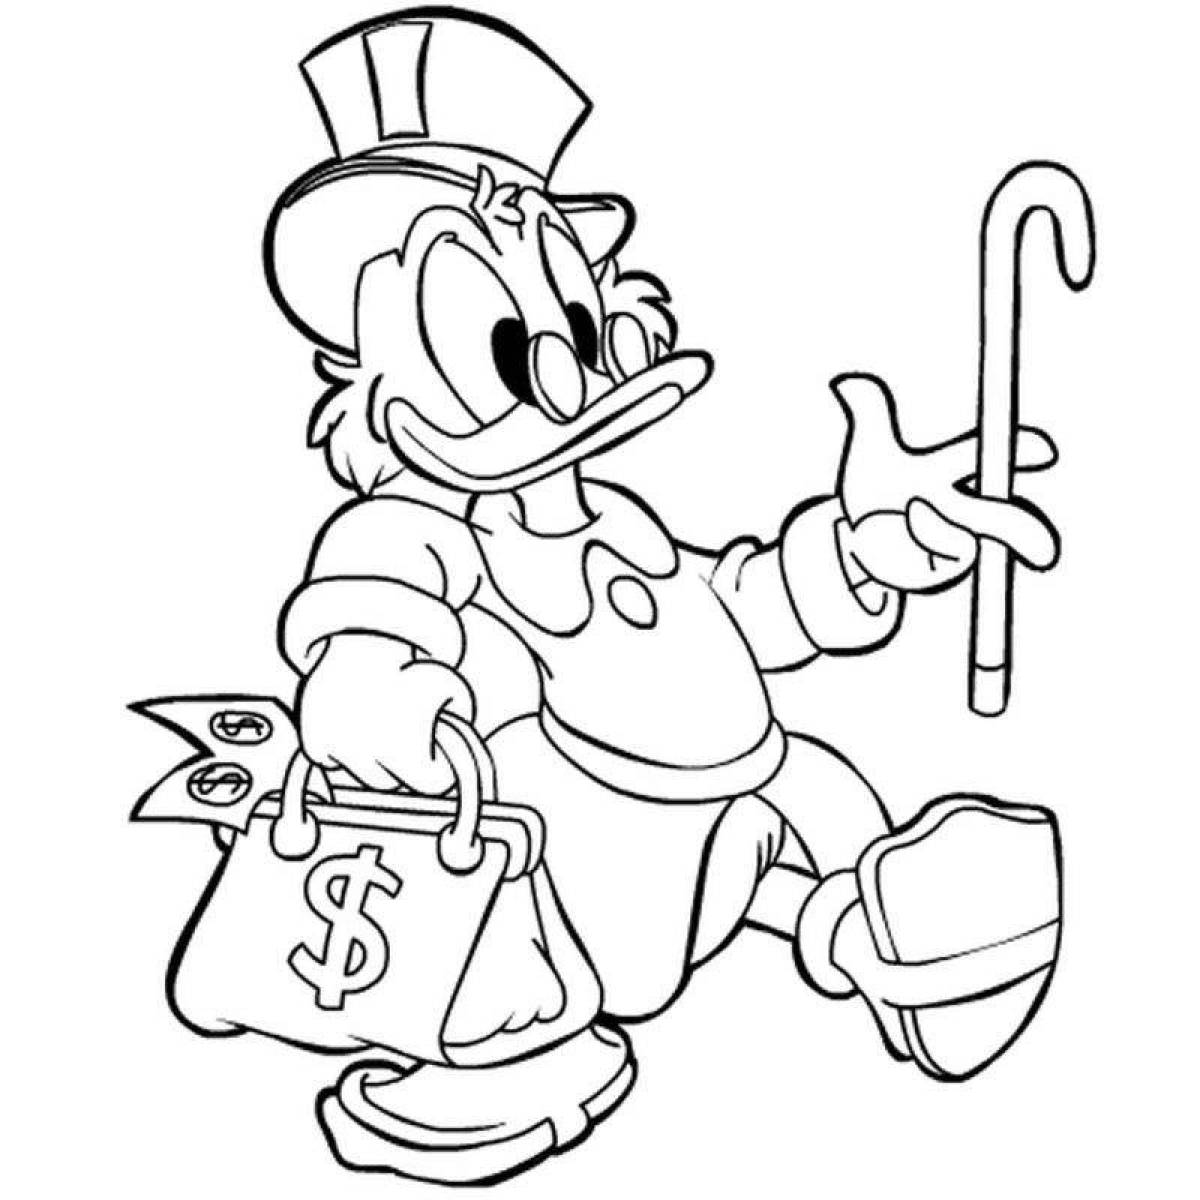 Rampant Scrooge McDuck coloring page